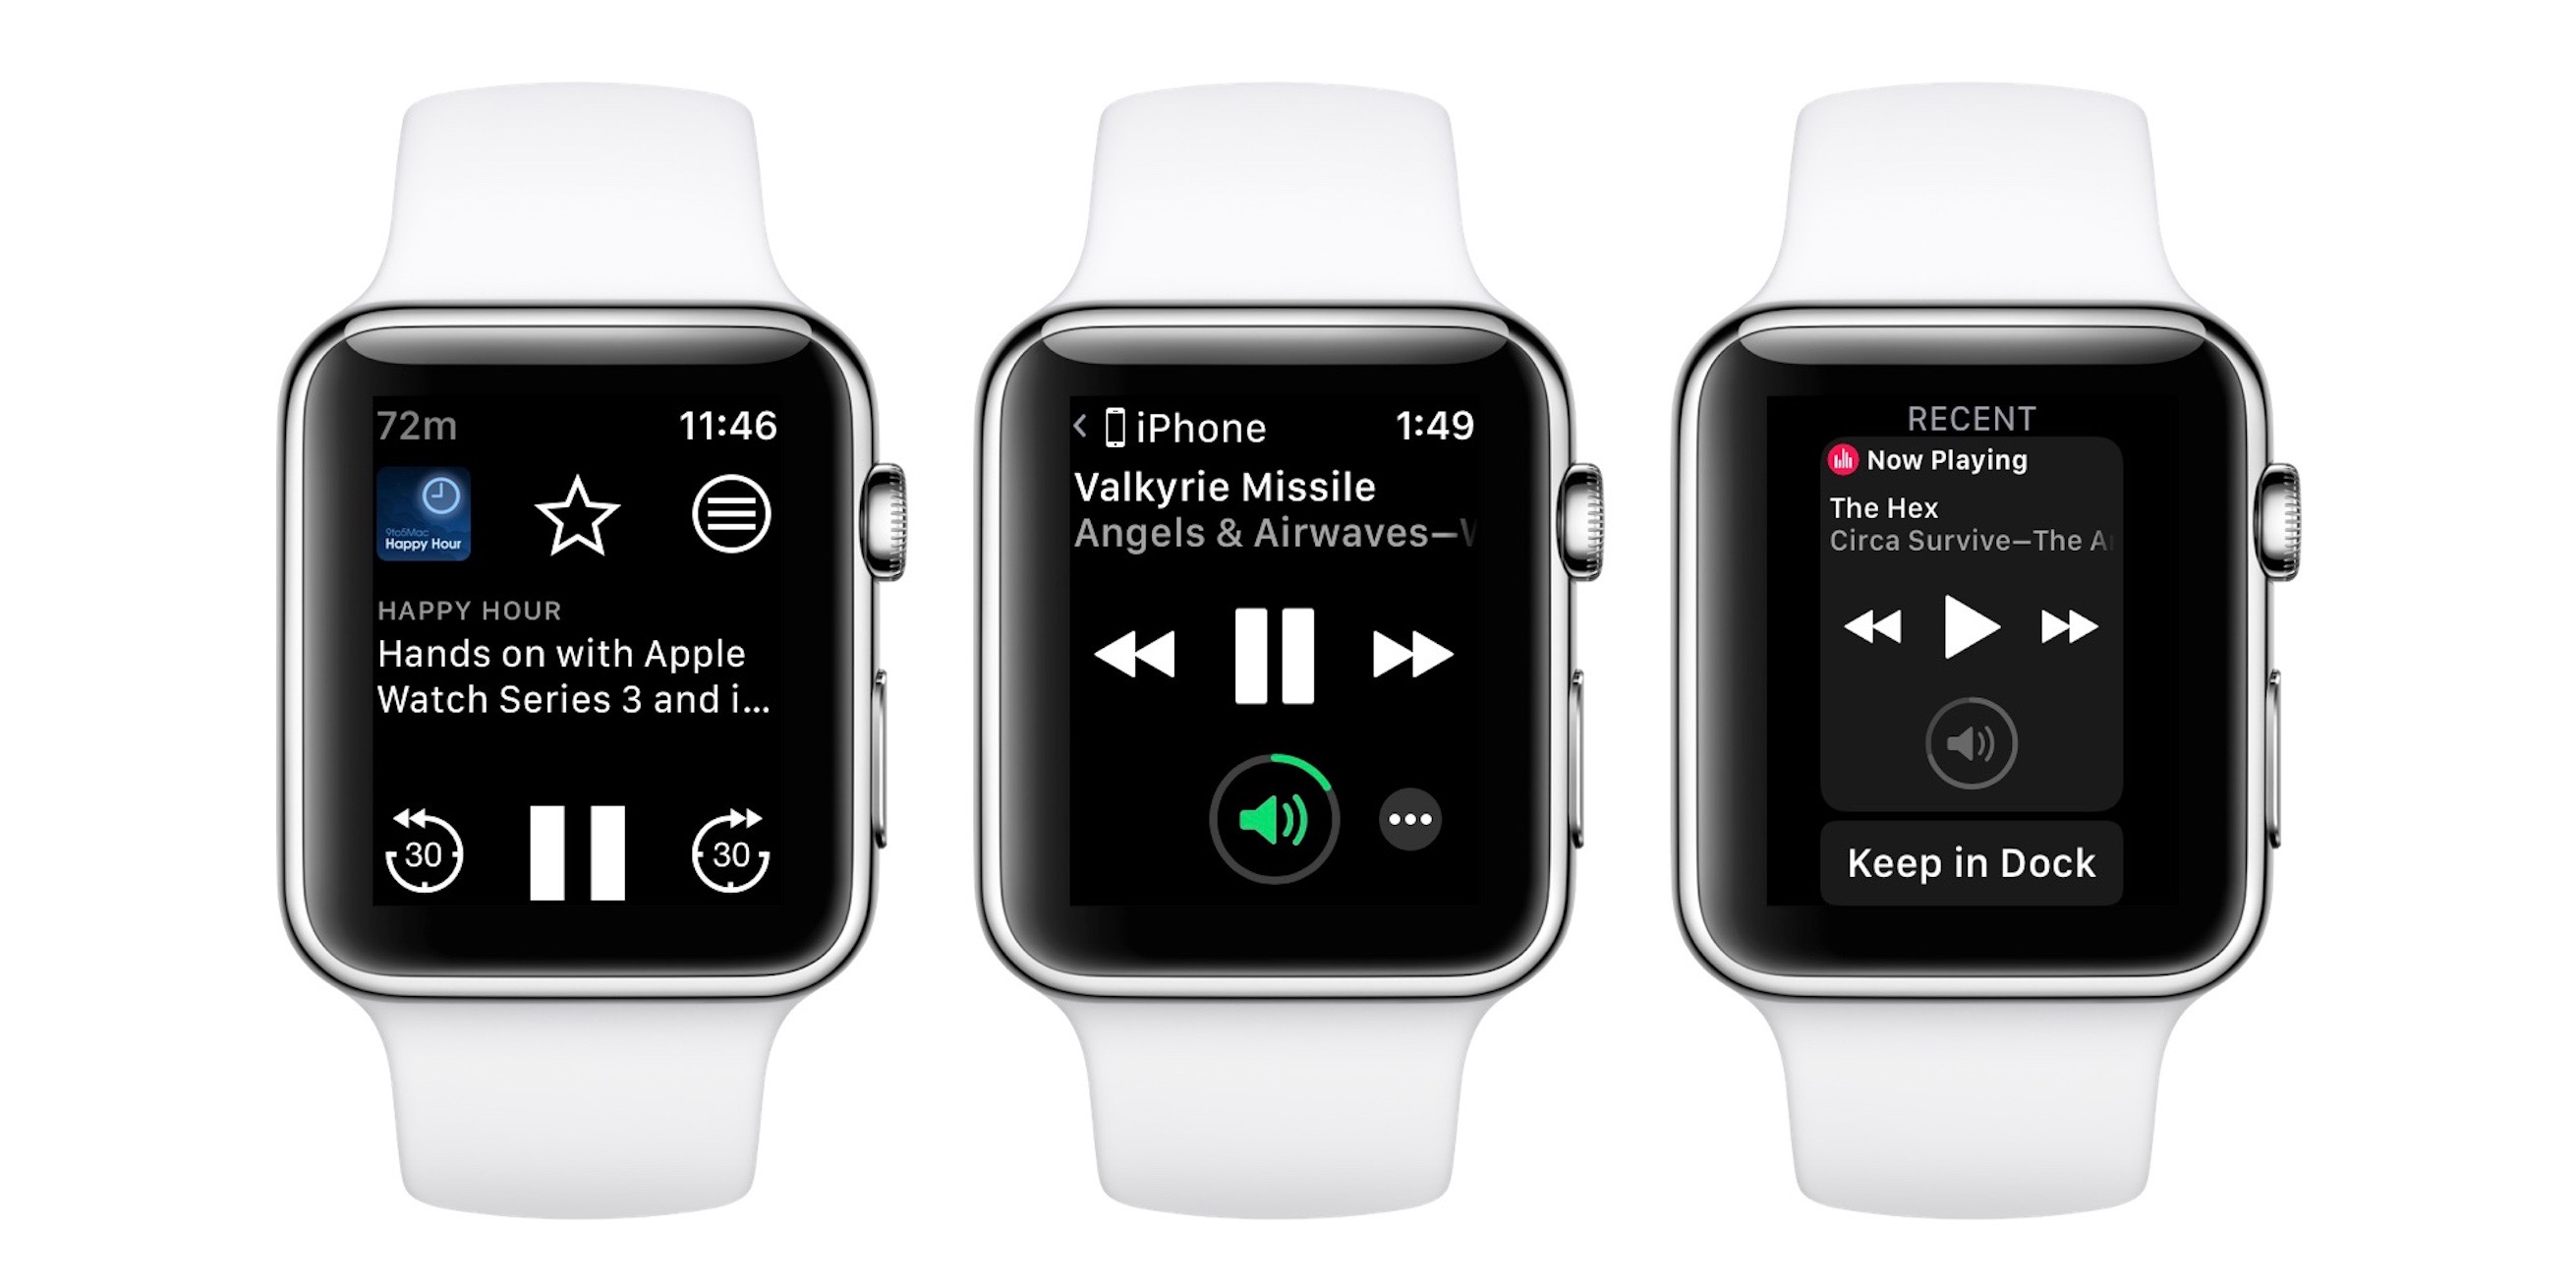 Update: Apple Watch Series 5 feature 